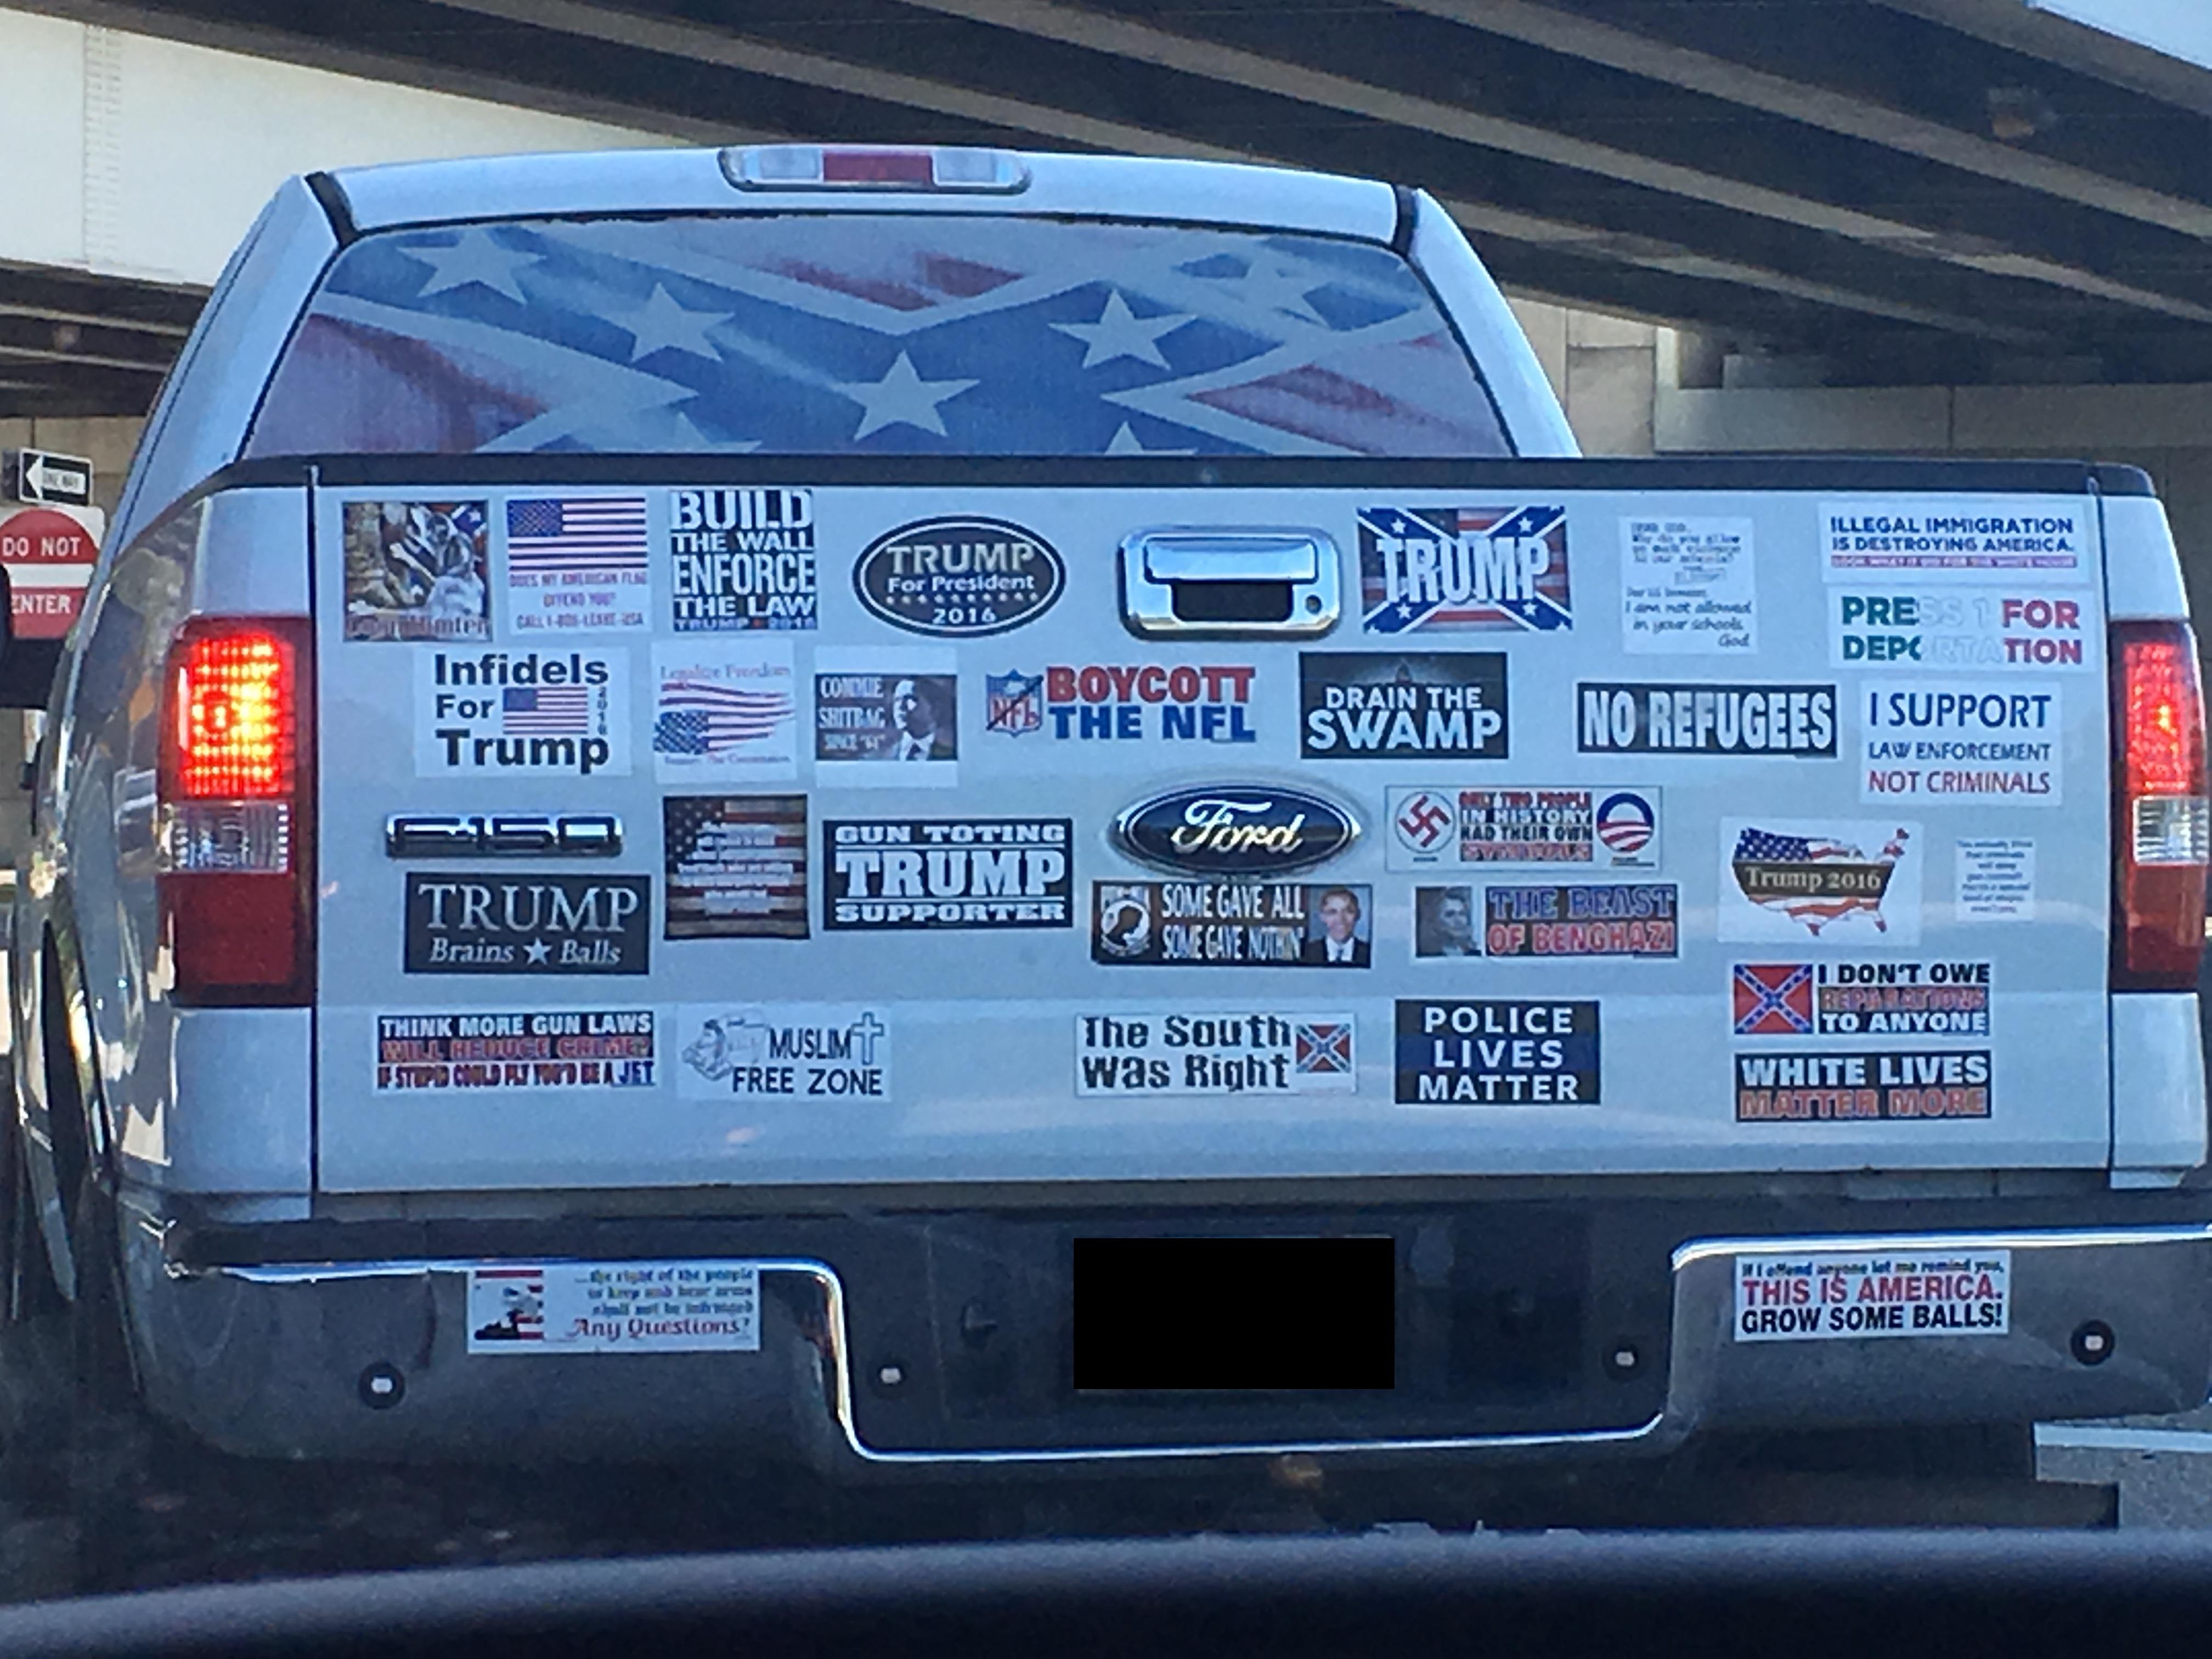 Racist Redneck Bumper Stickers on Pickup Truck